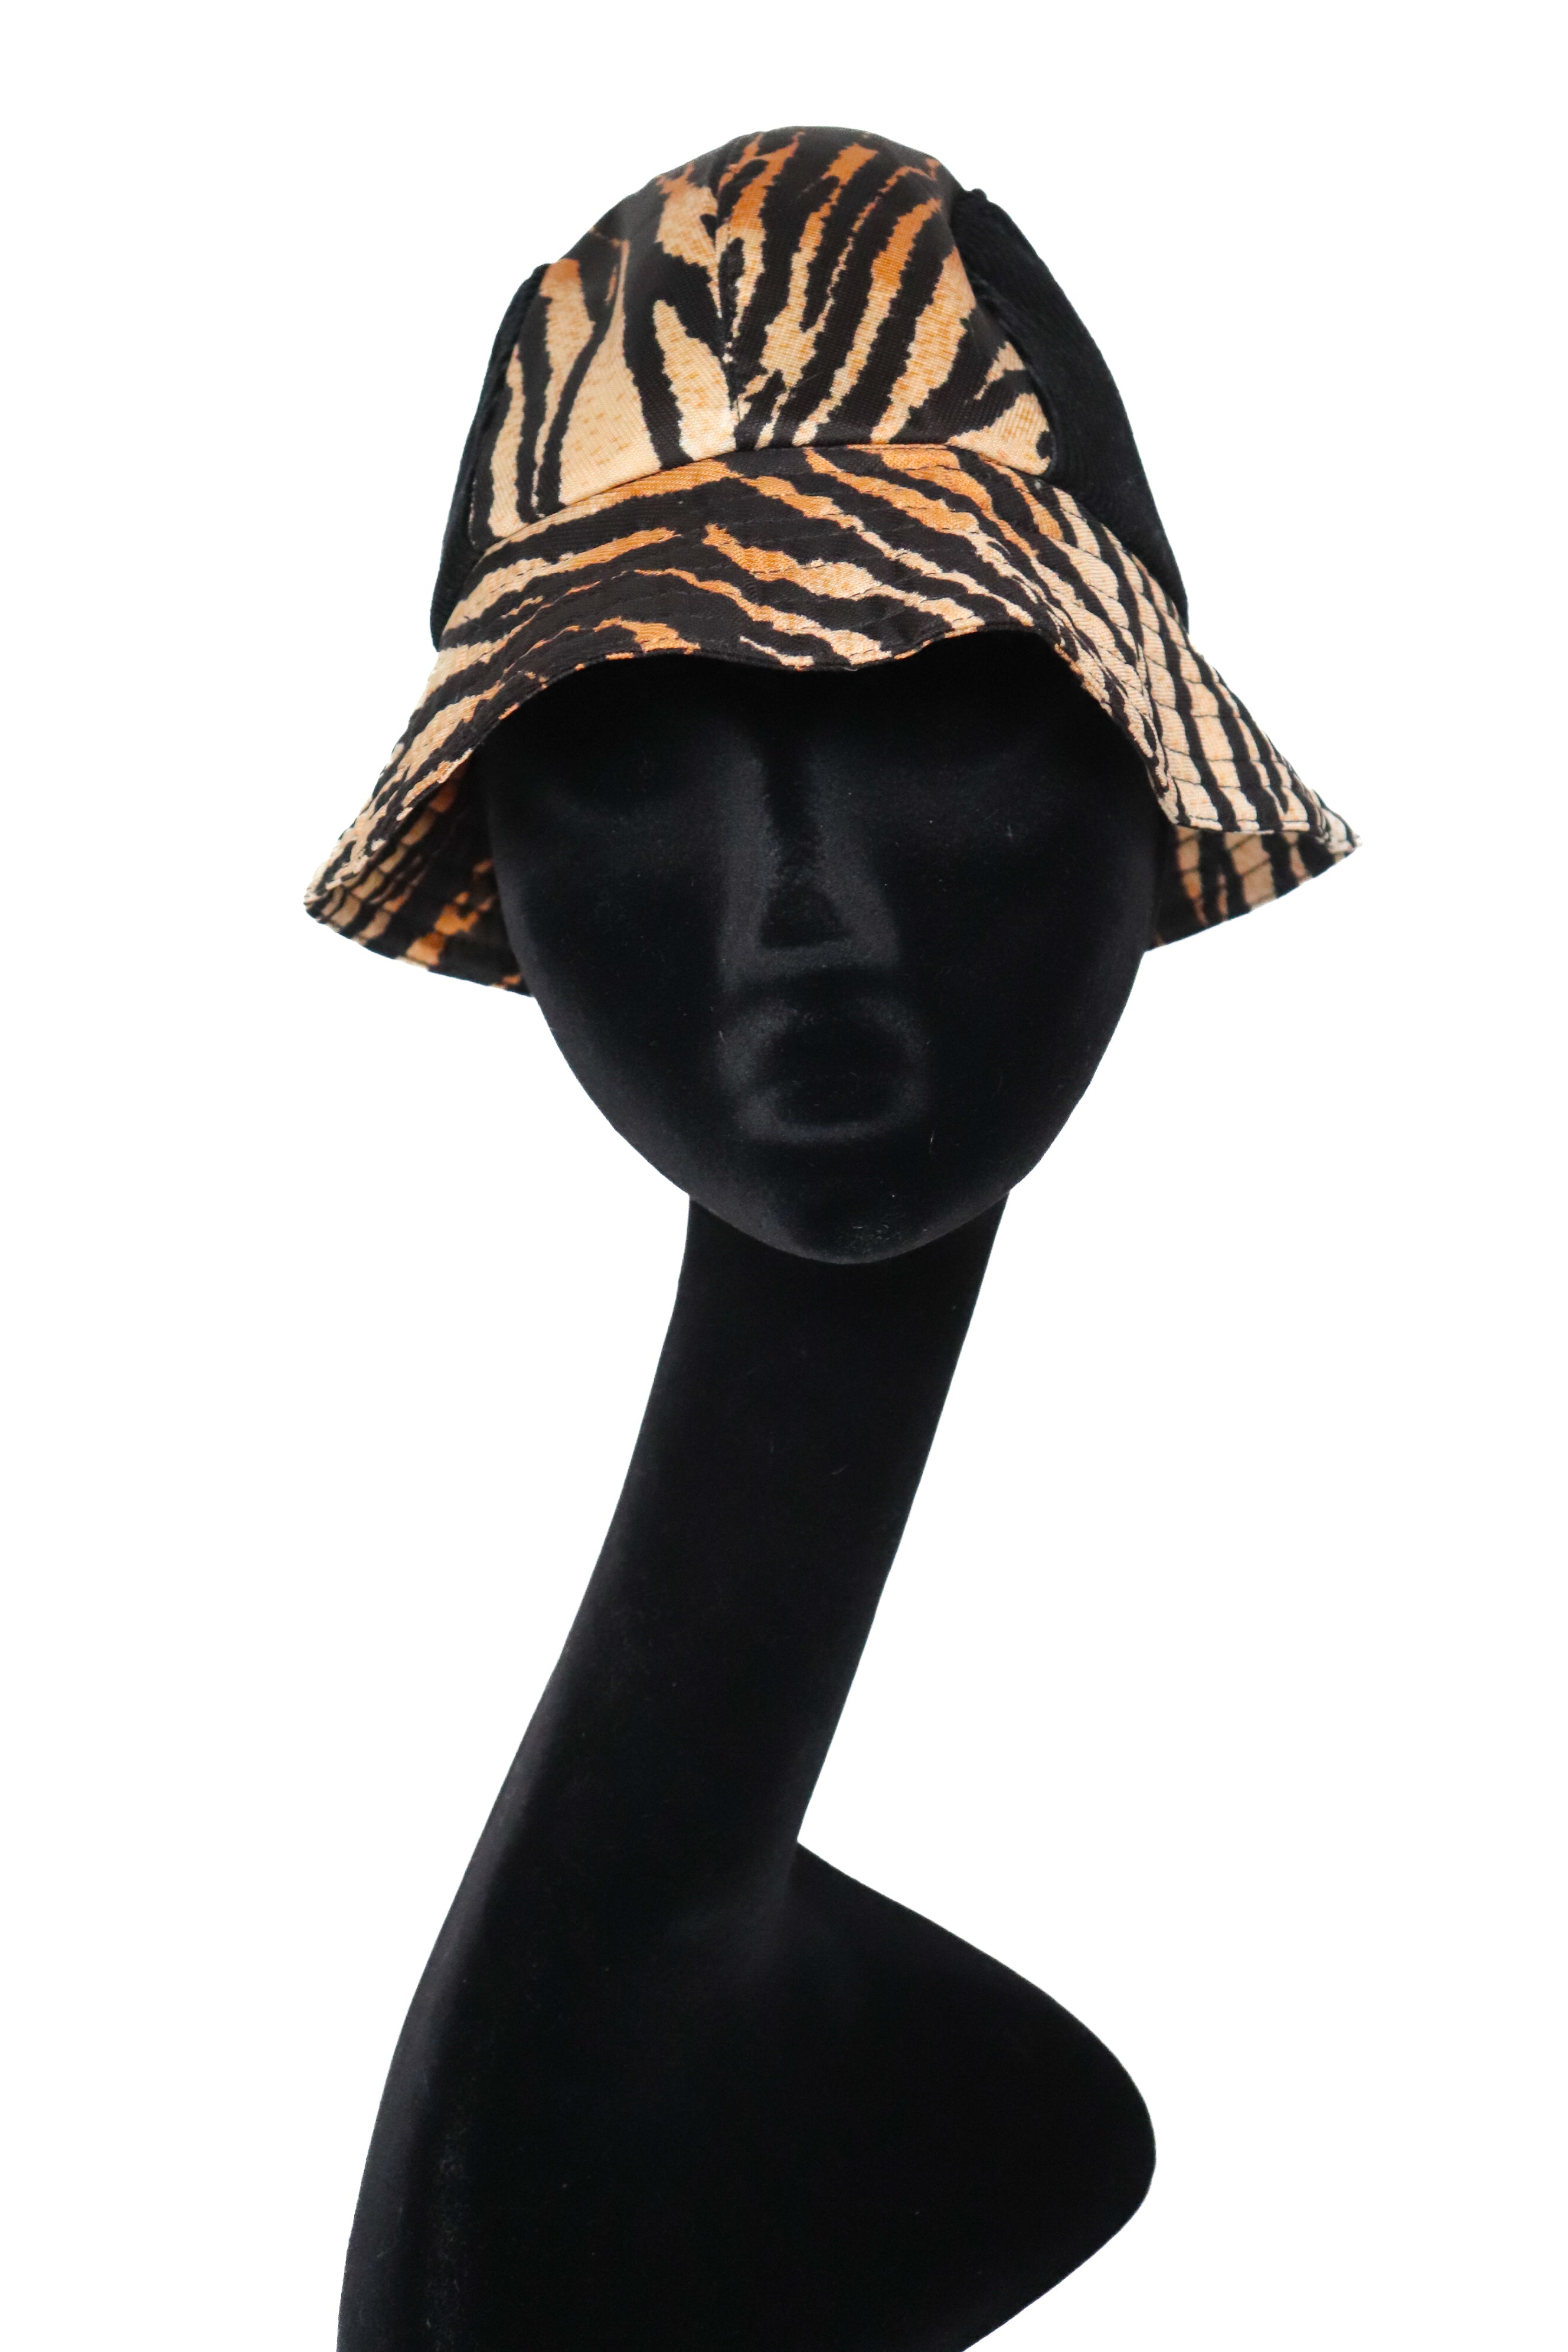 Edward Mann Ladies Bucket Hat - Tiger Print - Vintage 1960s - Small